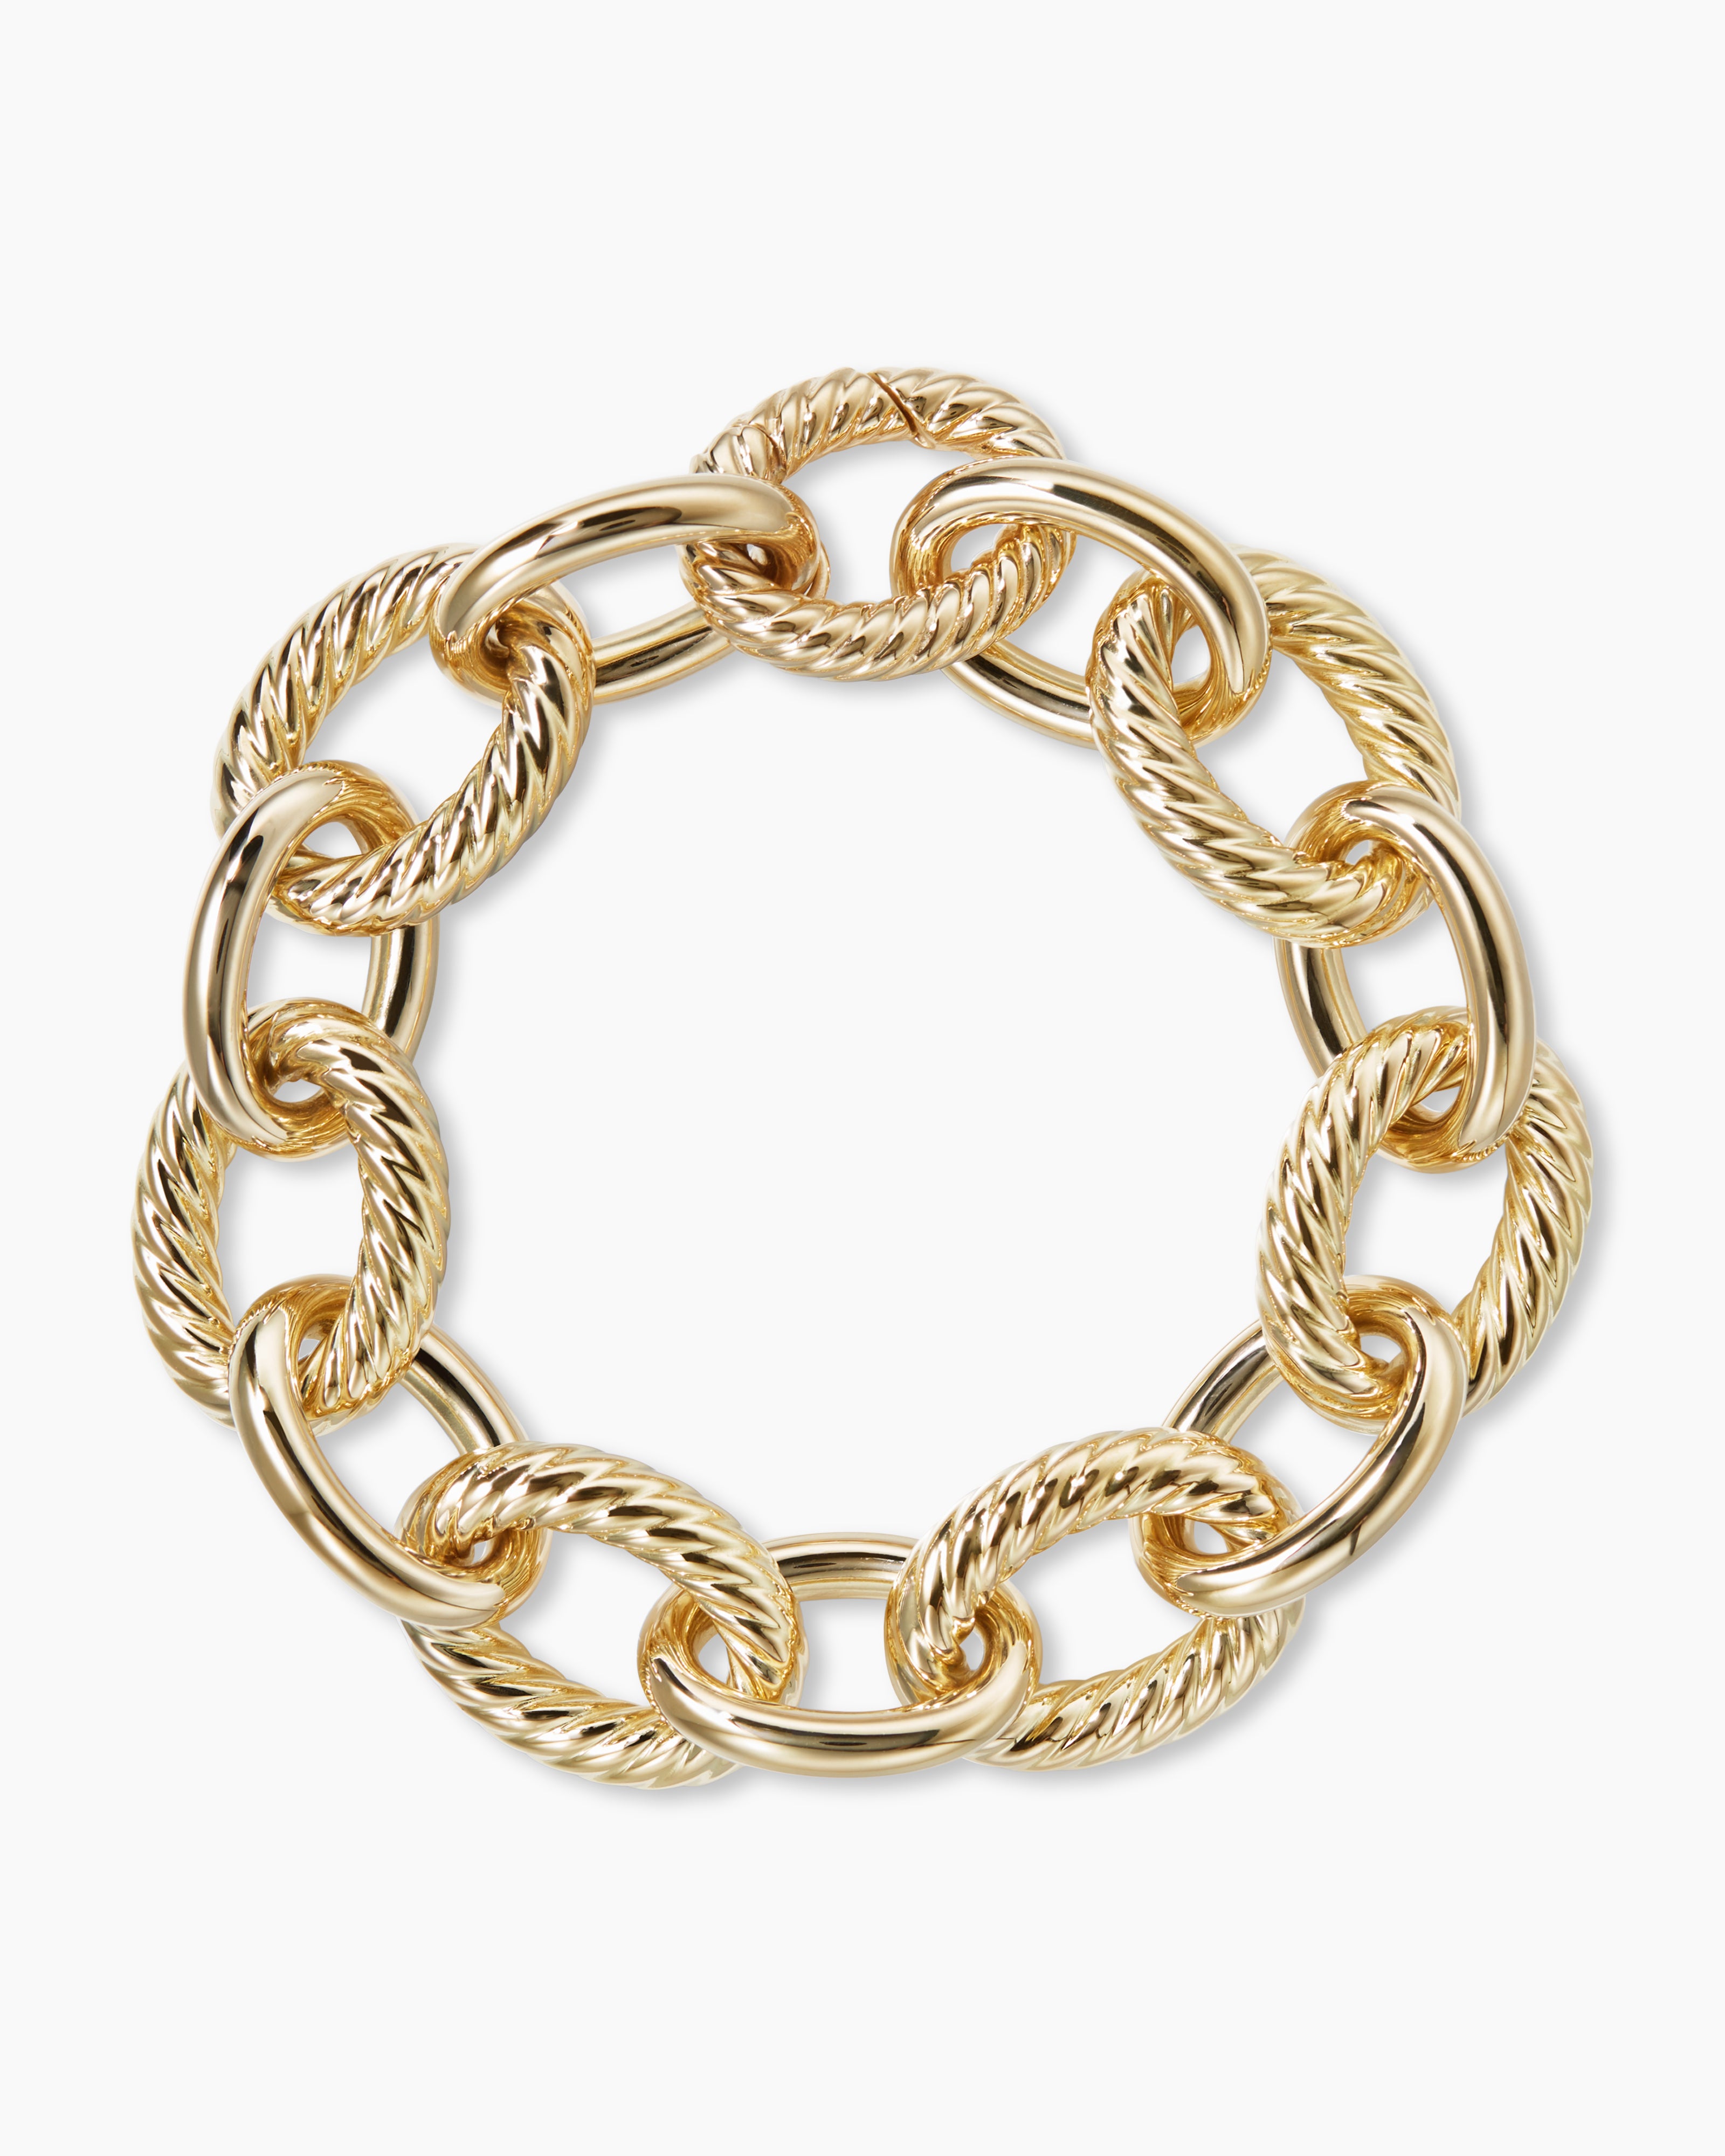 14K Gold Chain Link Bracelet, Solid Gold Bracelet, Petite Oval